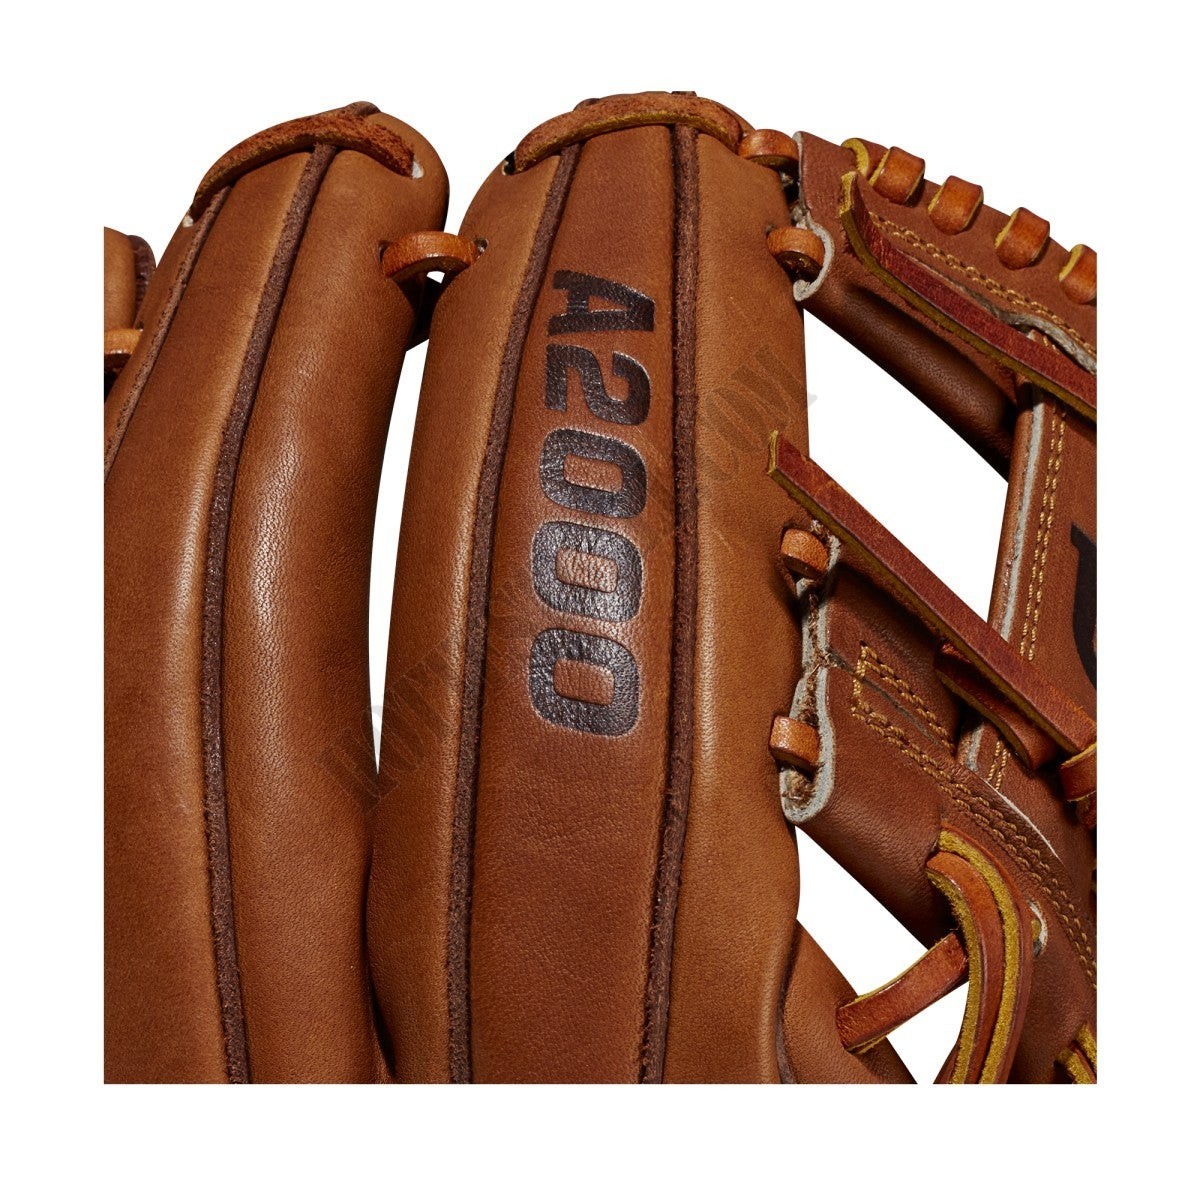 2021 A2000 1786 Laredo 11.5"Infield Baseball Glove - Right Hand Throw ● Wilson Promotions - -6